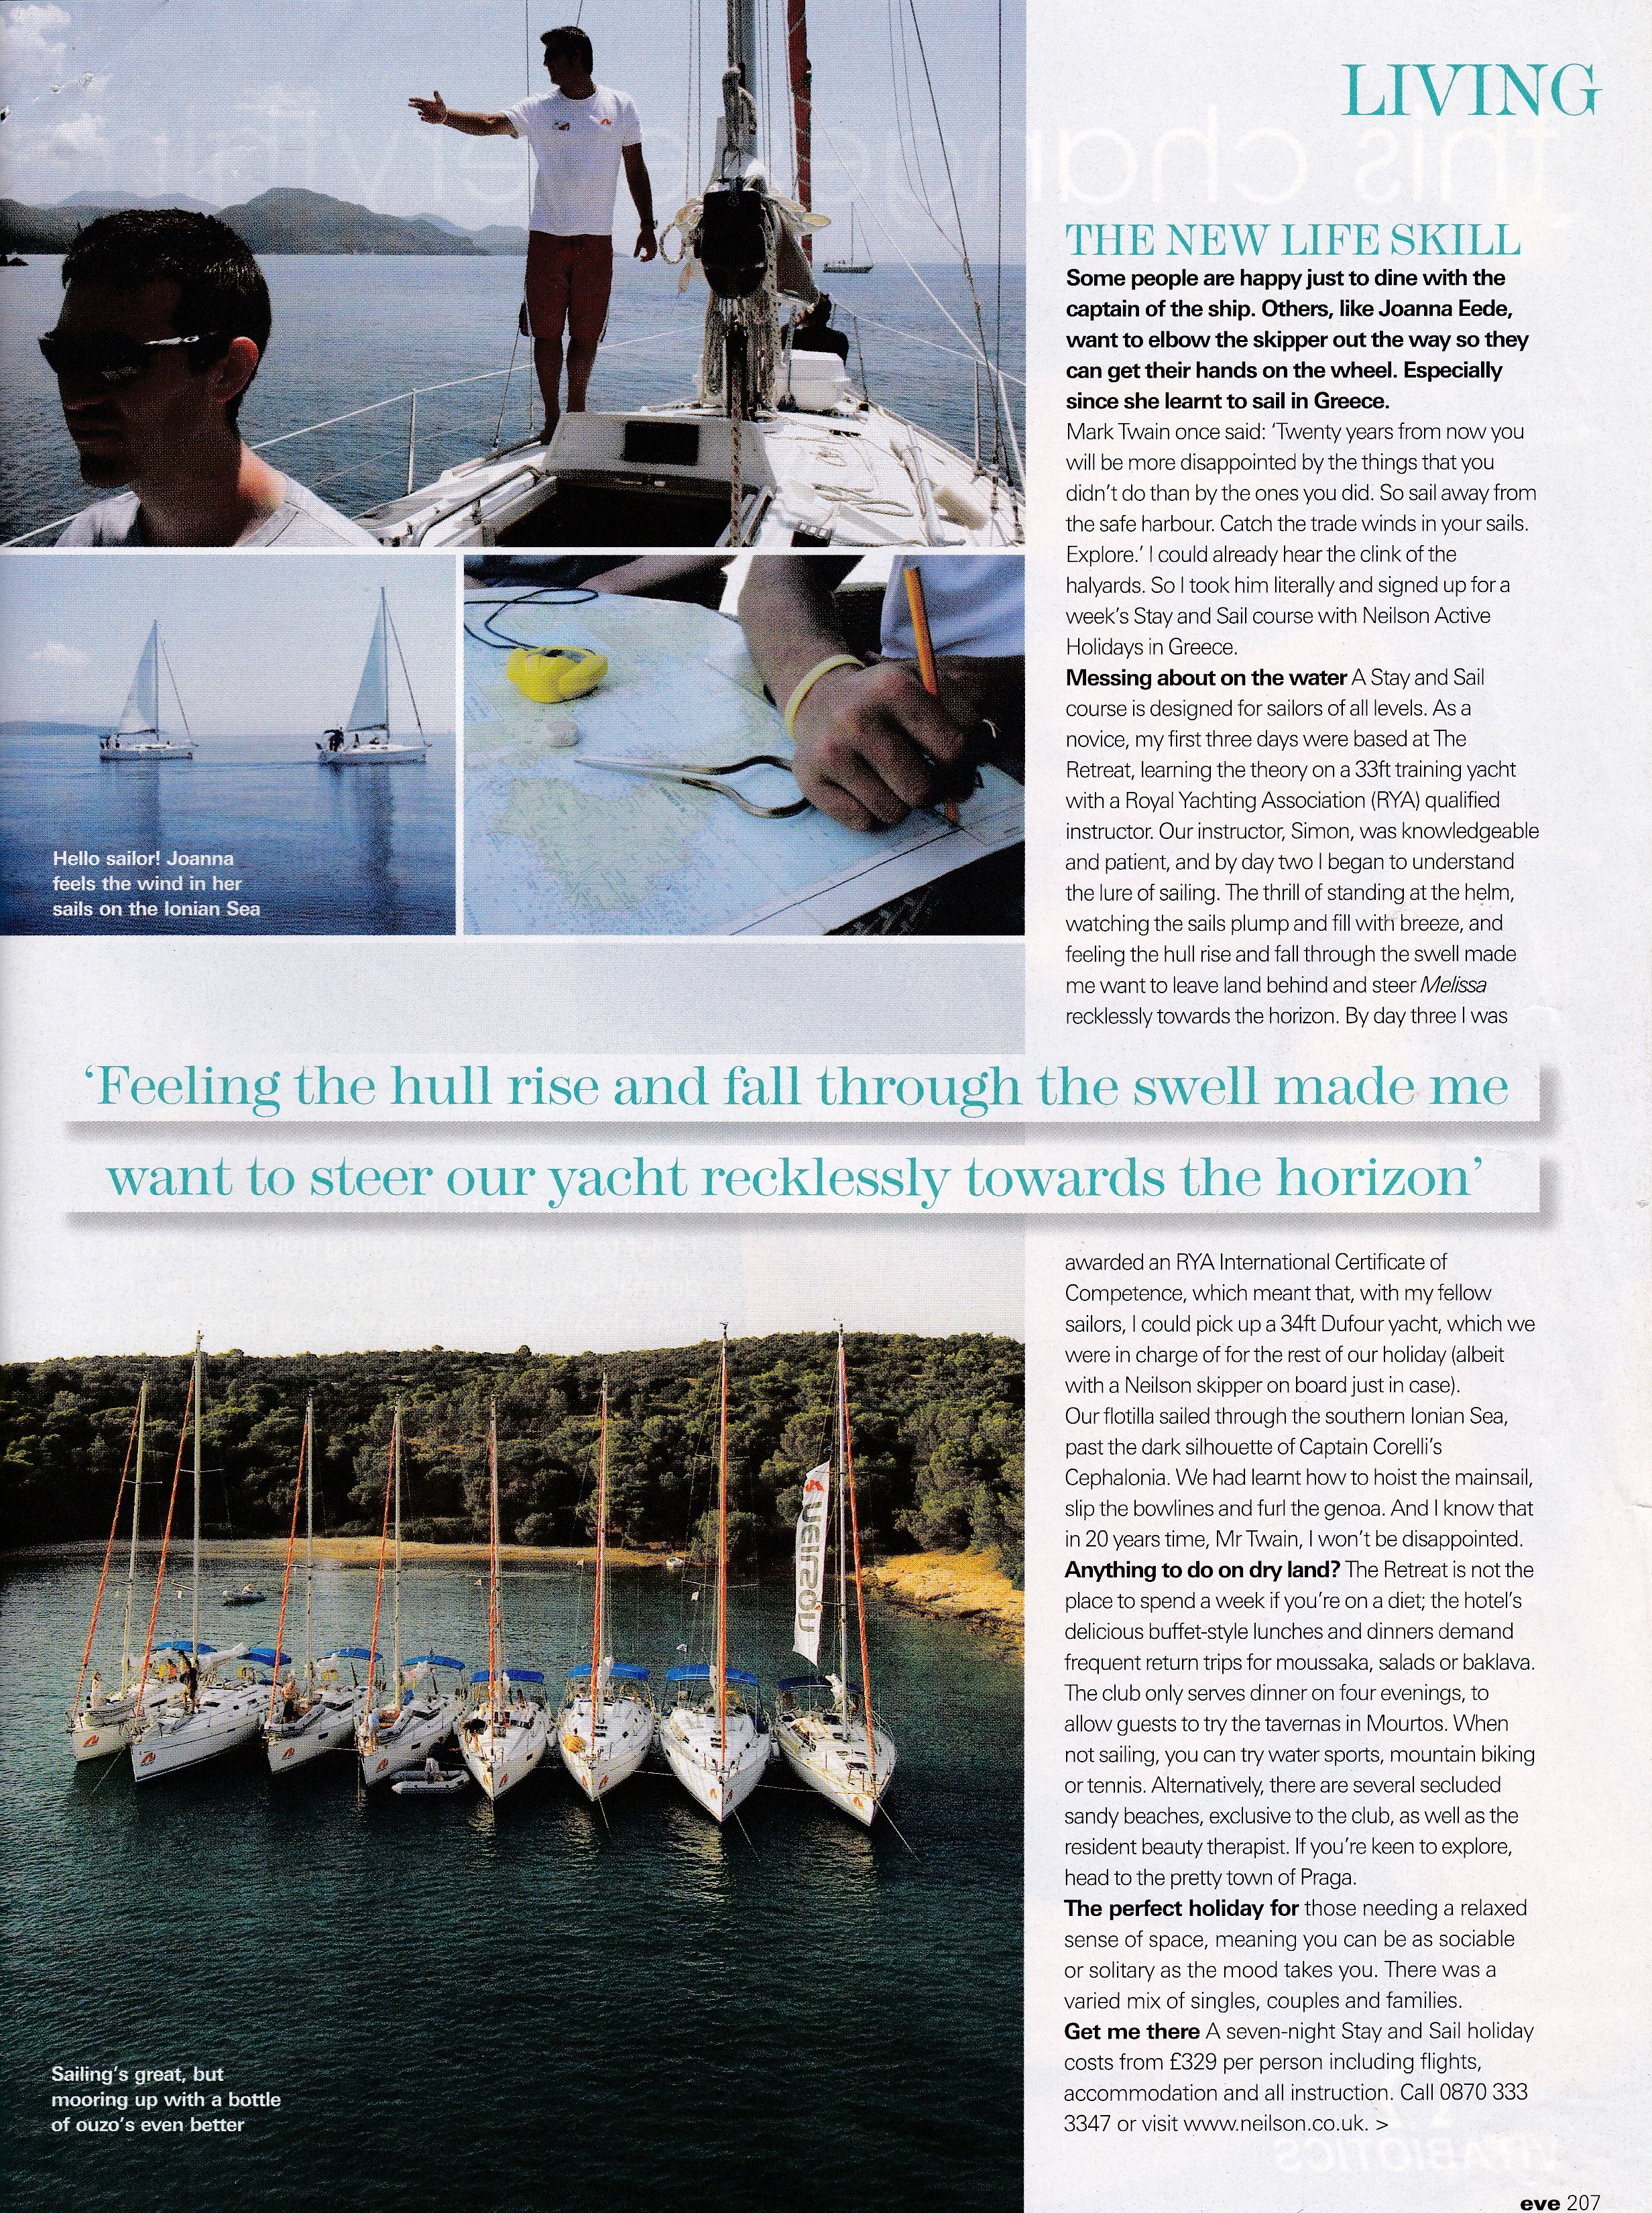 Sailing story for Eve magazine